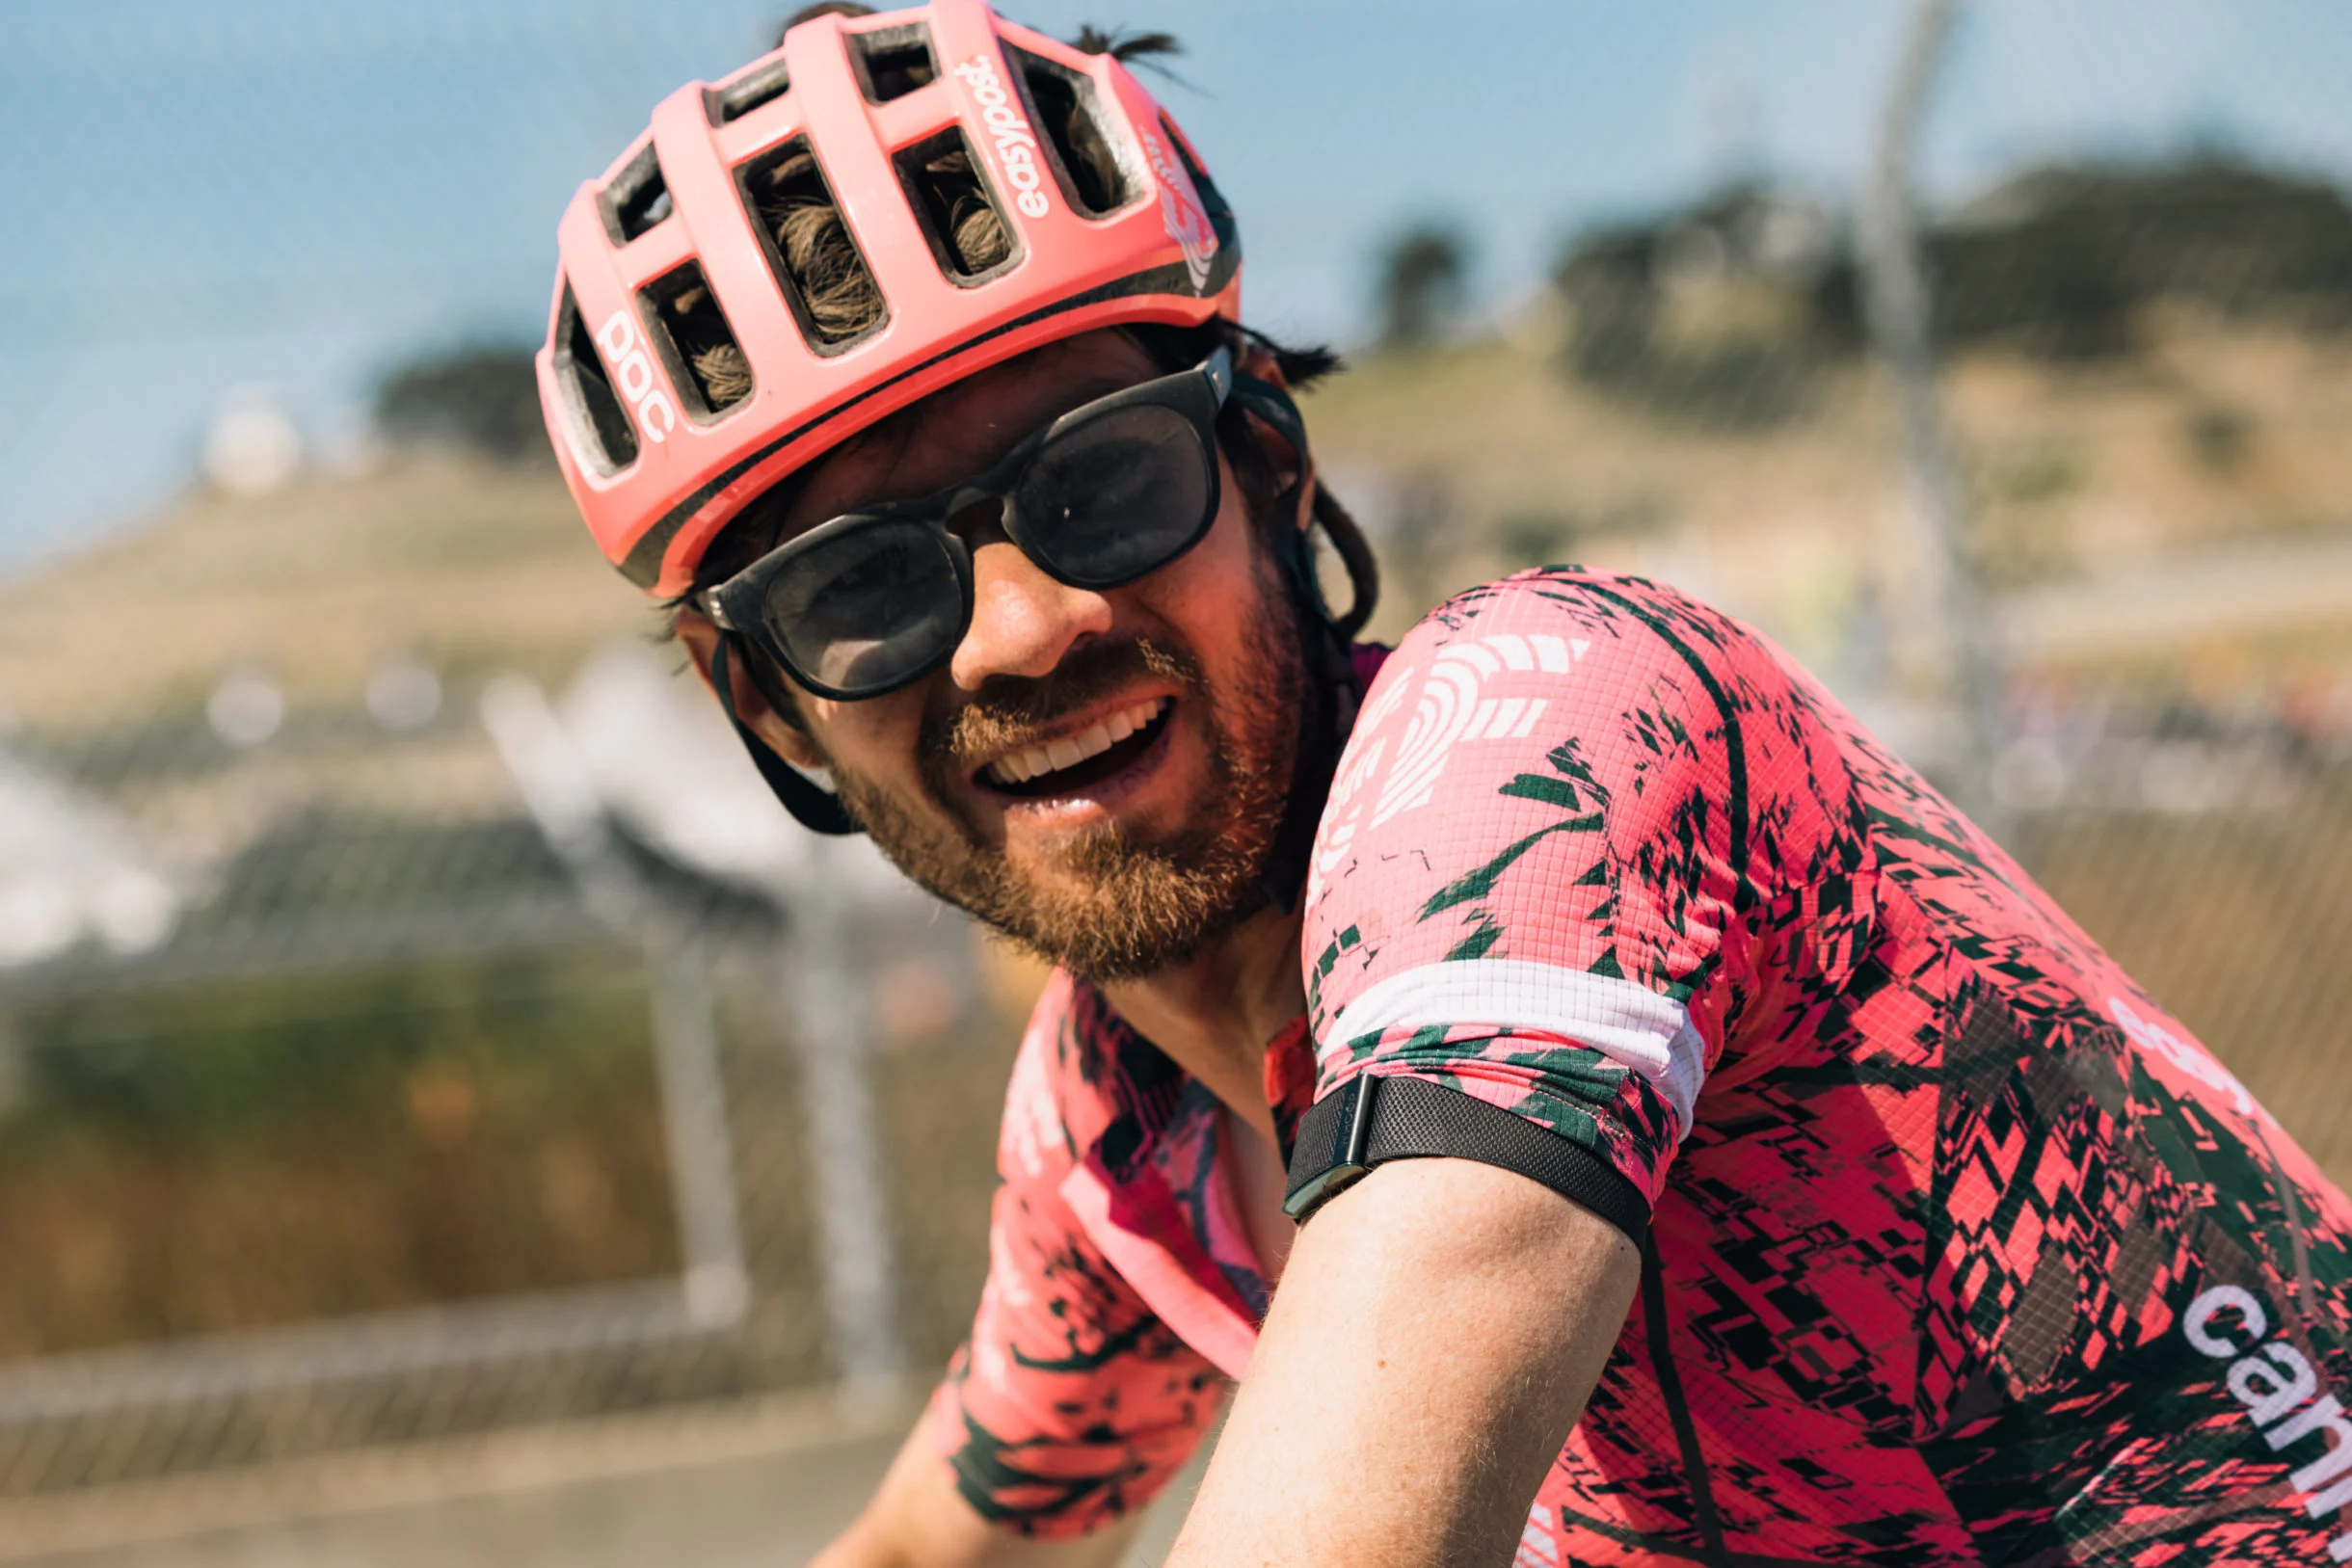 Pro Cyclist Alex Howes on Why the Giro d’Italia is the Hardest Race on Earth